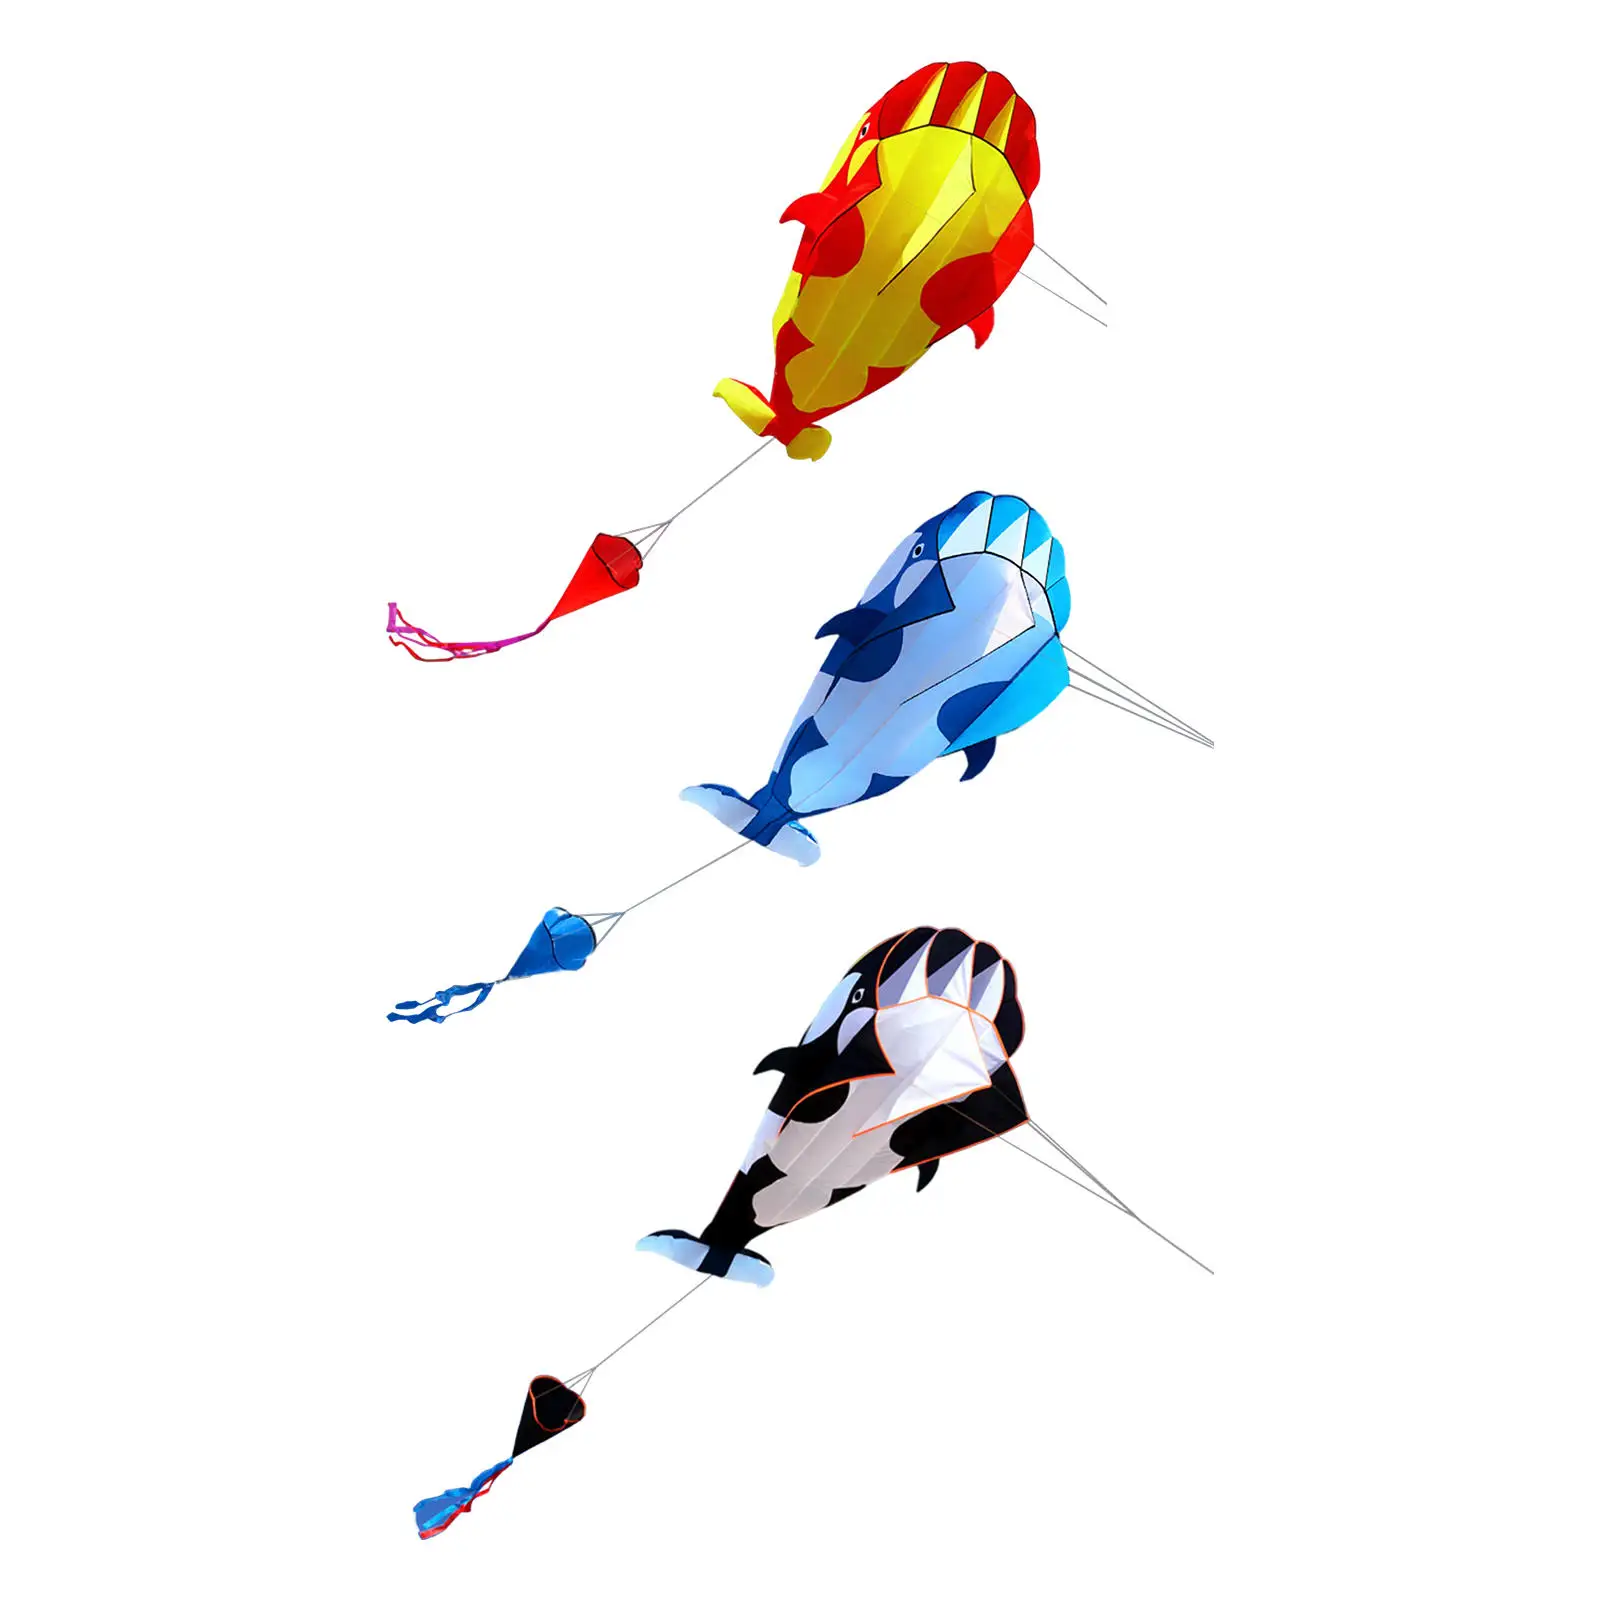 Soft Killer Whale Kite with 30M Kites String Flying Kites Parafoil Beach Kite Large for Outdoor Entertainment